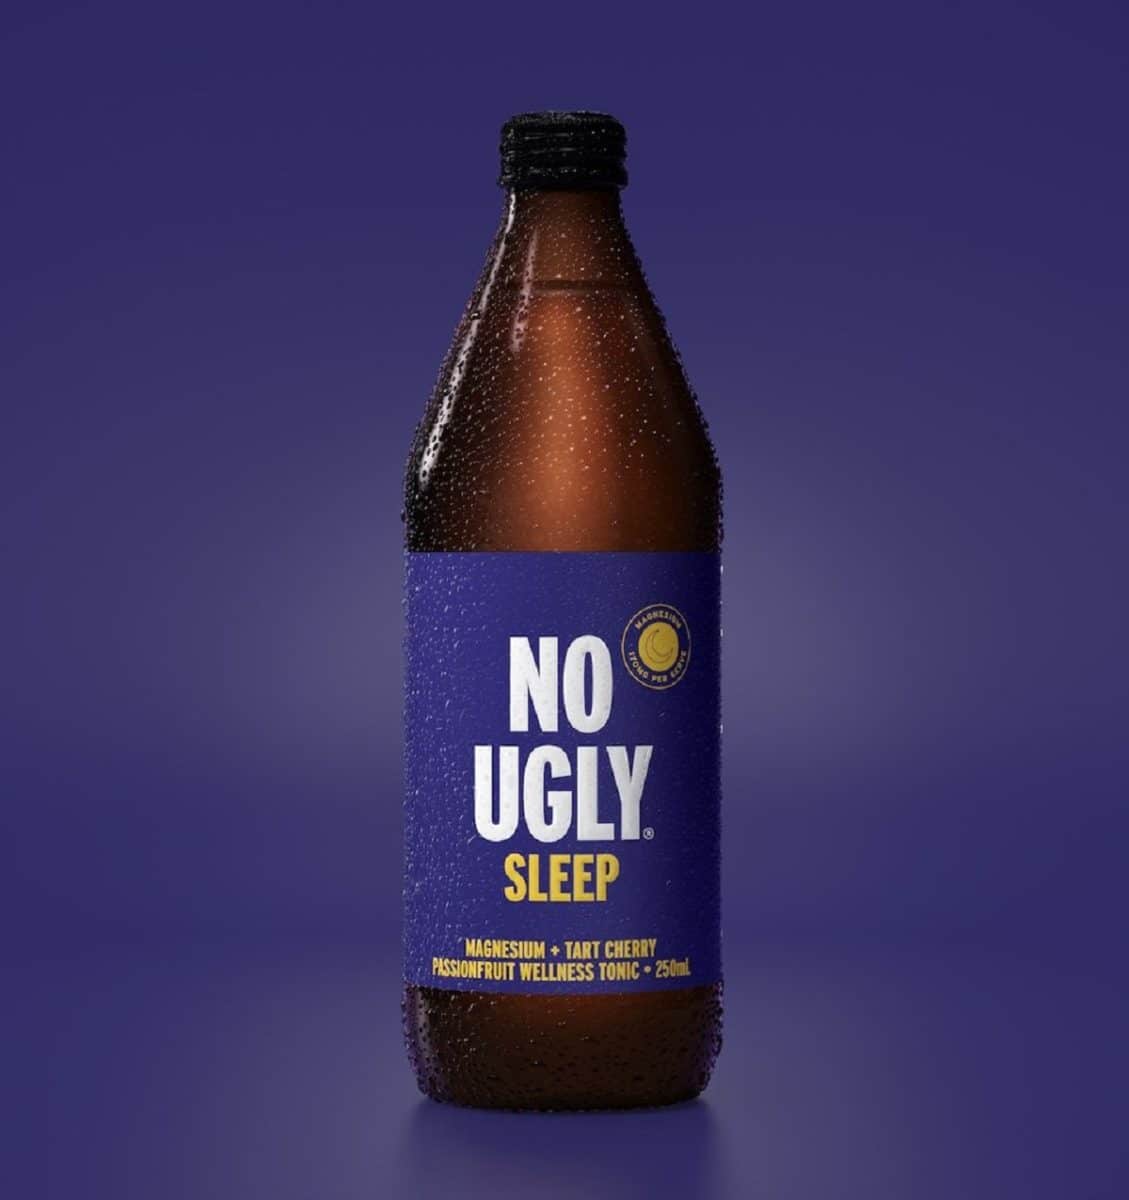 Is No Ugly sleep the best tasting sleep aid available?